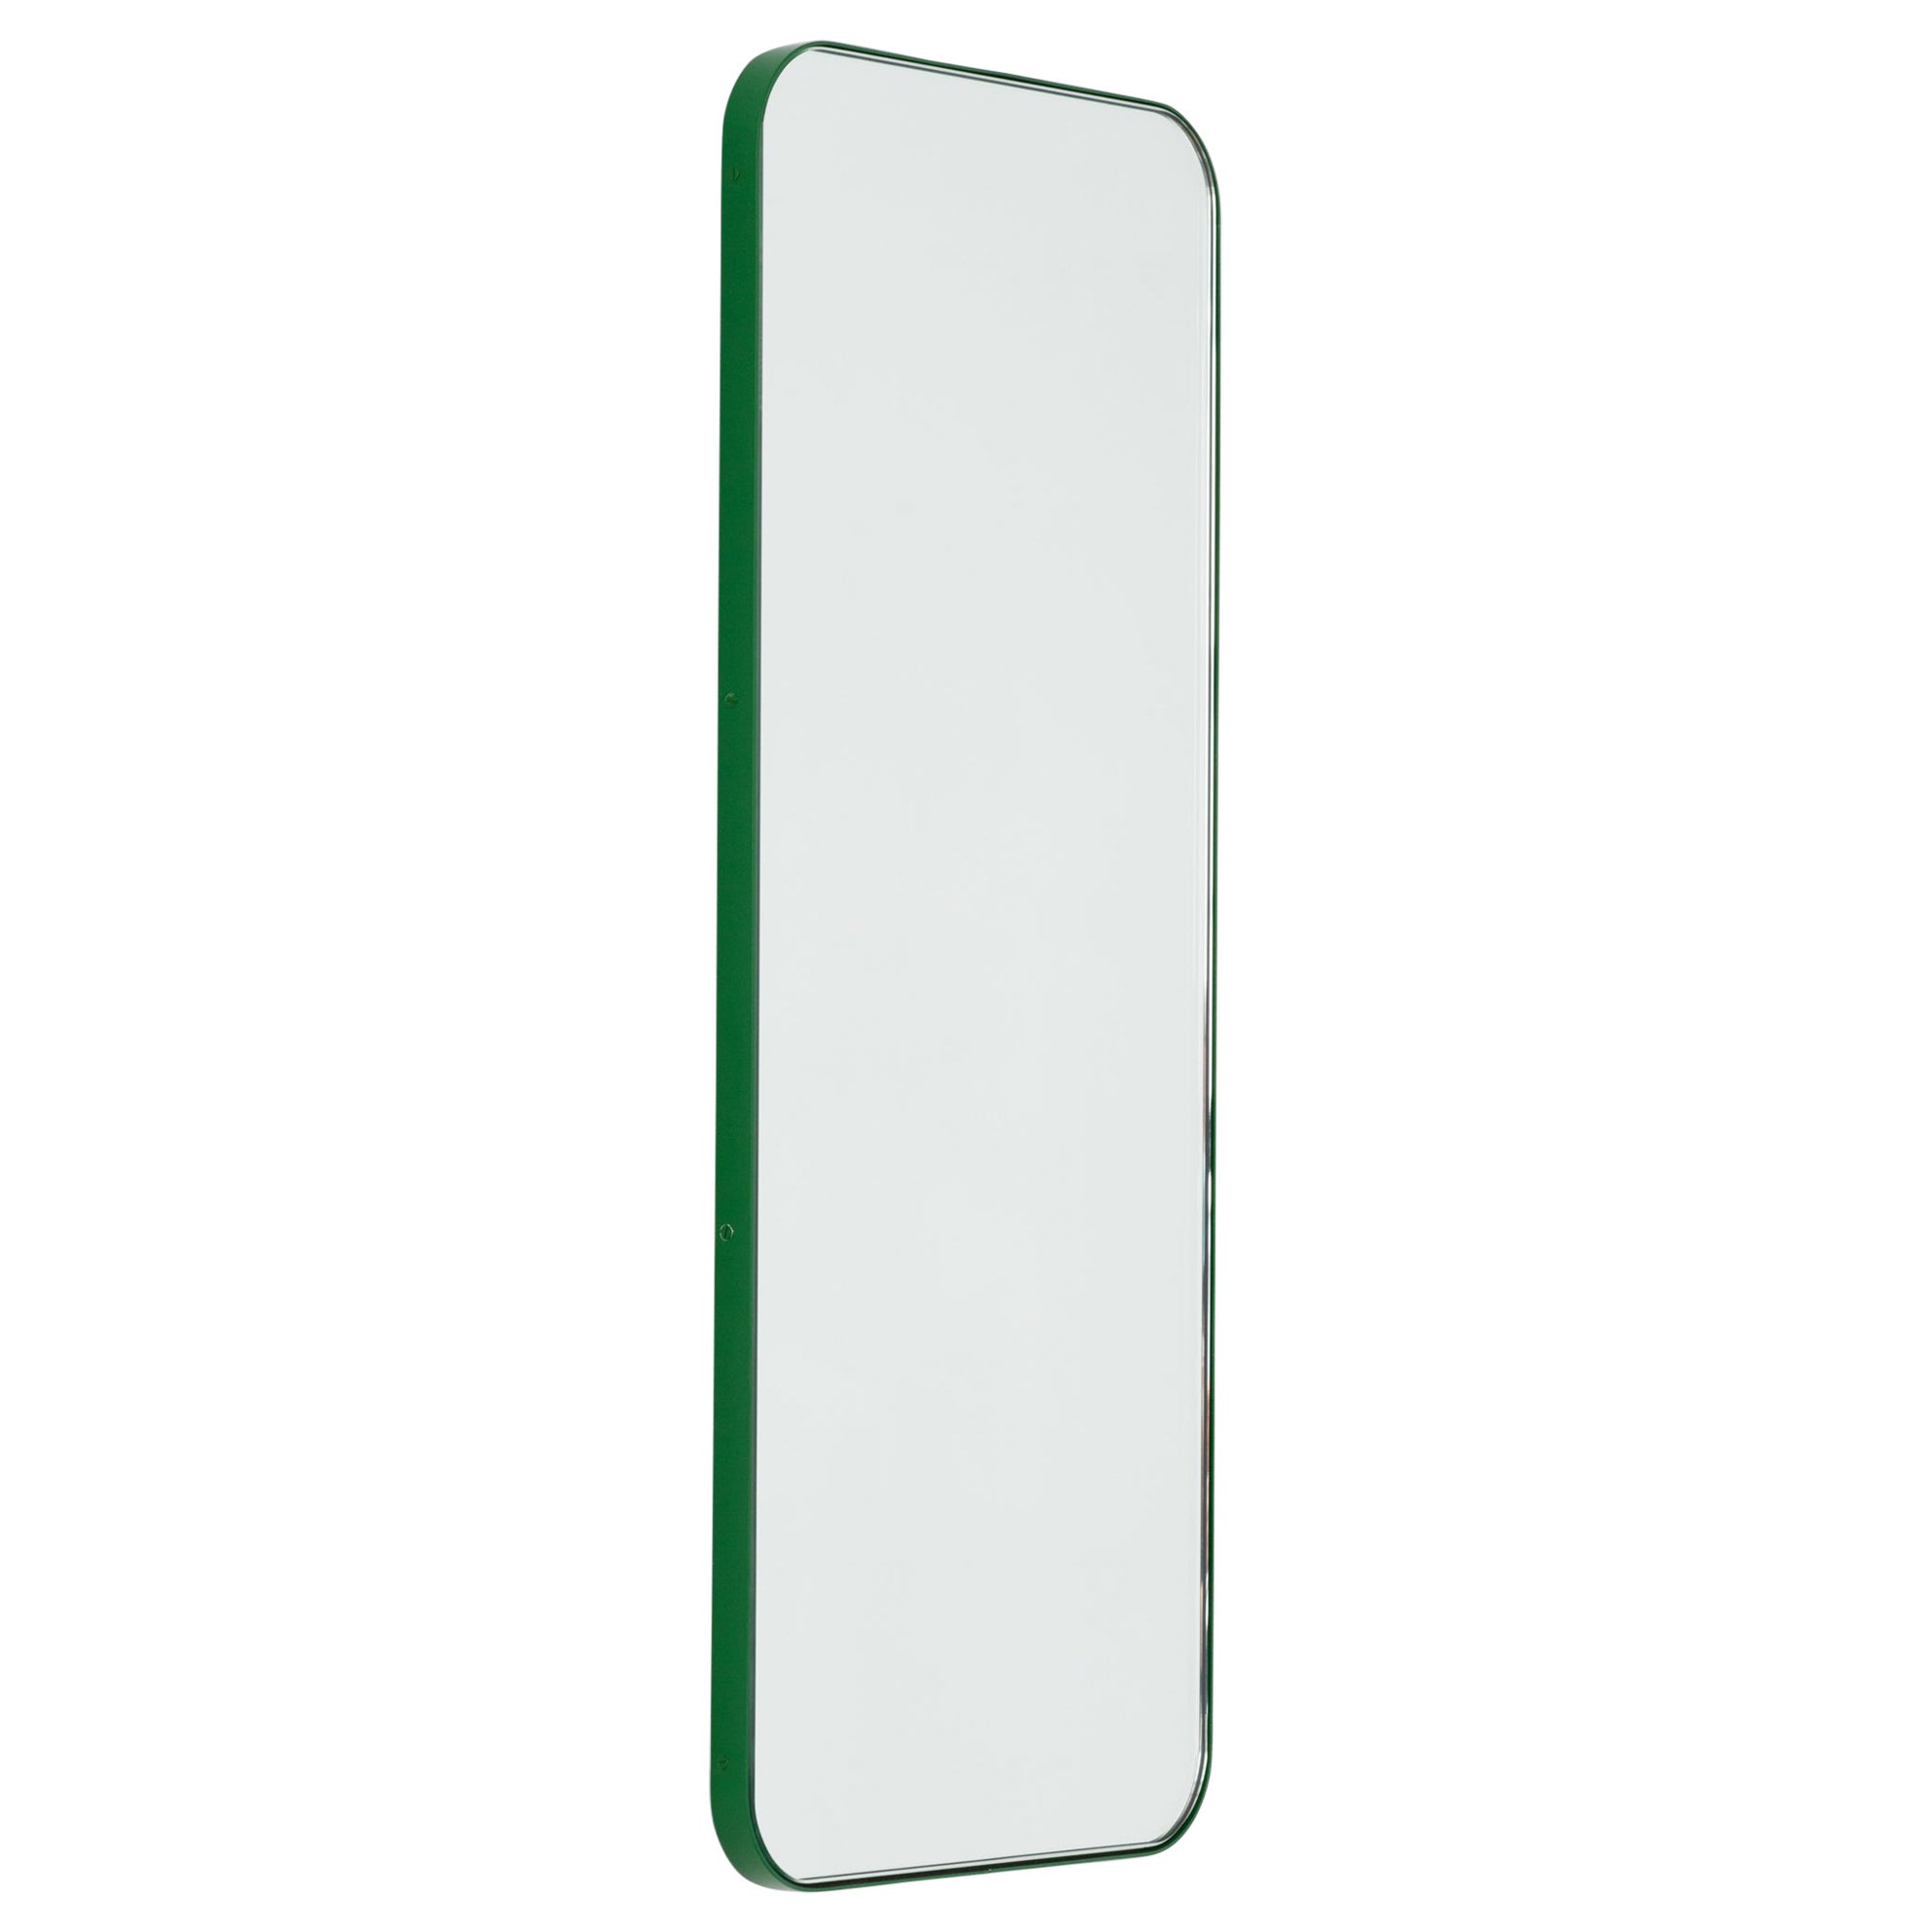 Quadris Rechteckiger Moderner Spiegel mit grünem Rahmen, groß